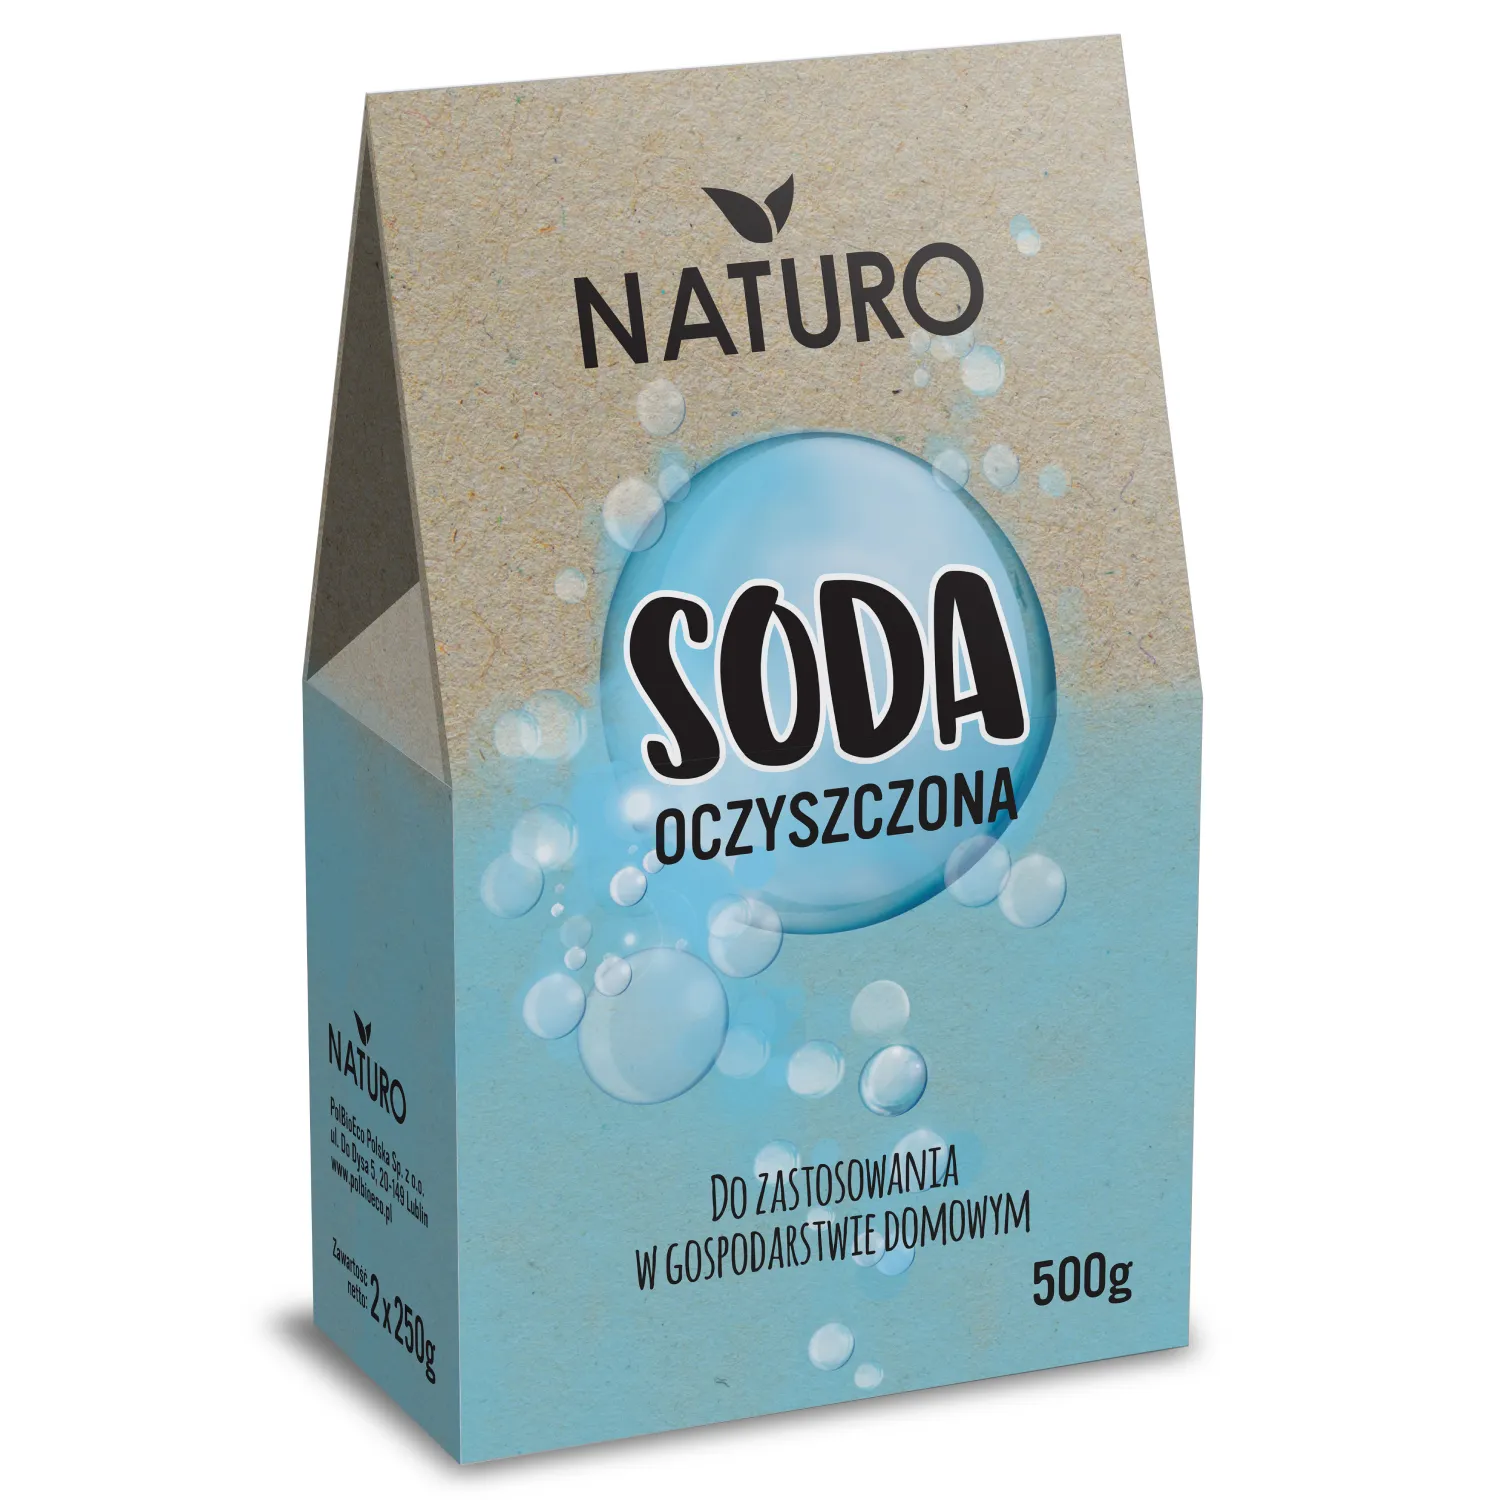 Naturo soda oczyszczona, 500 g